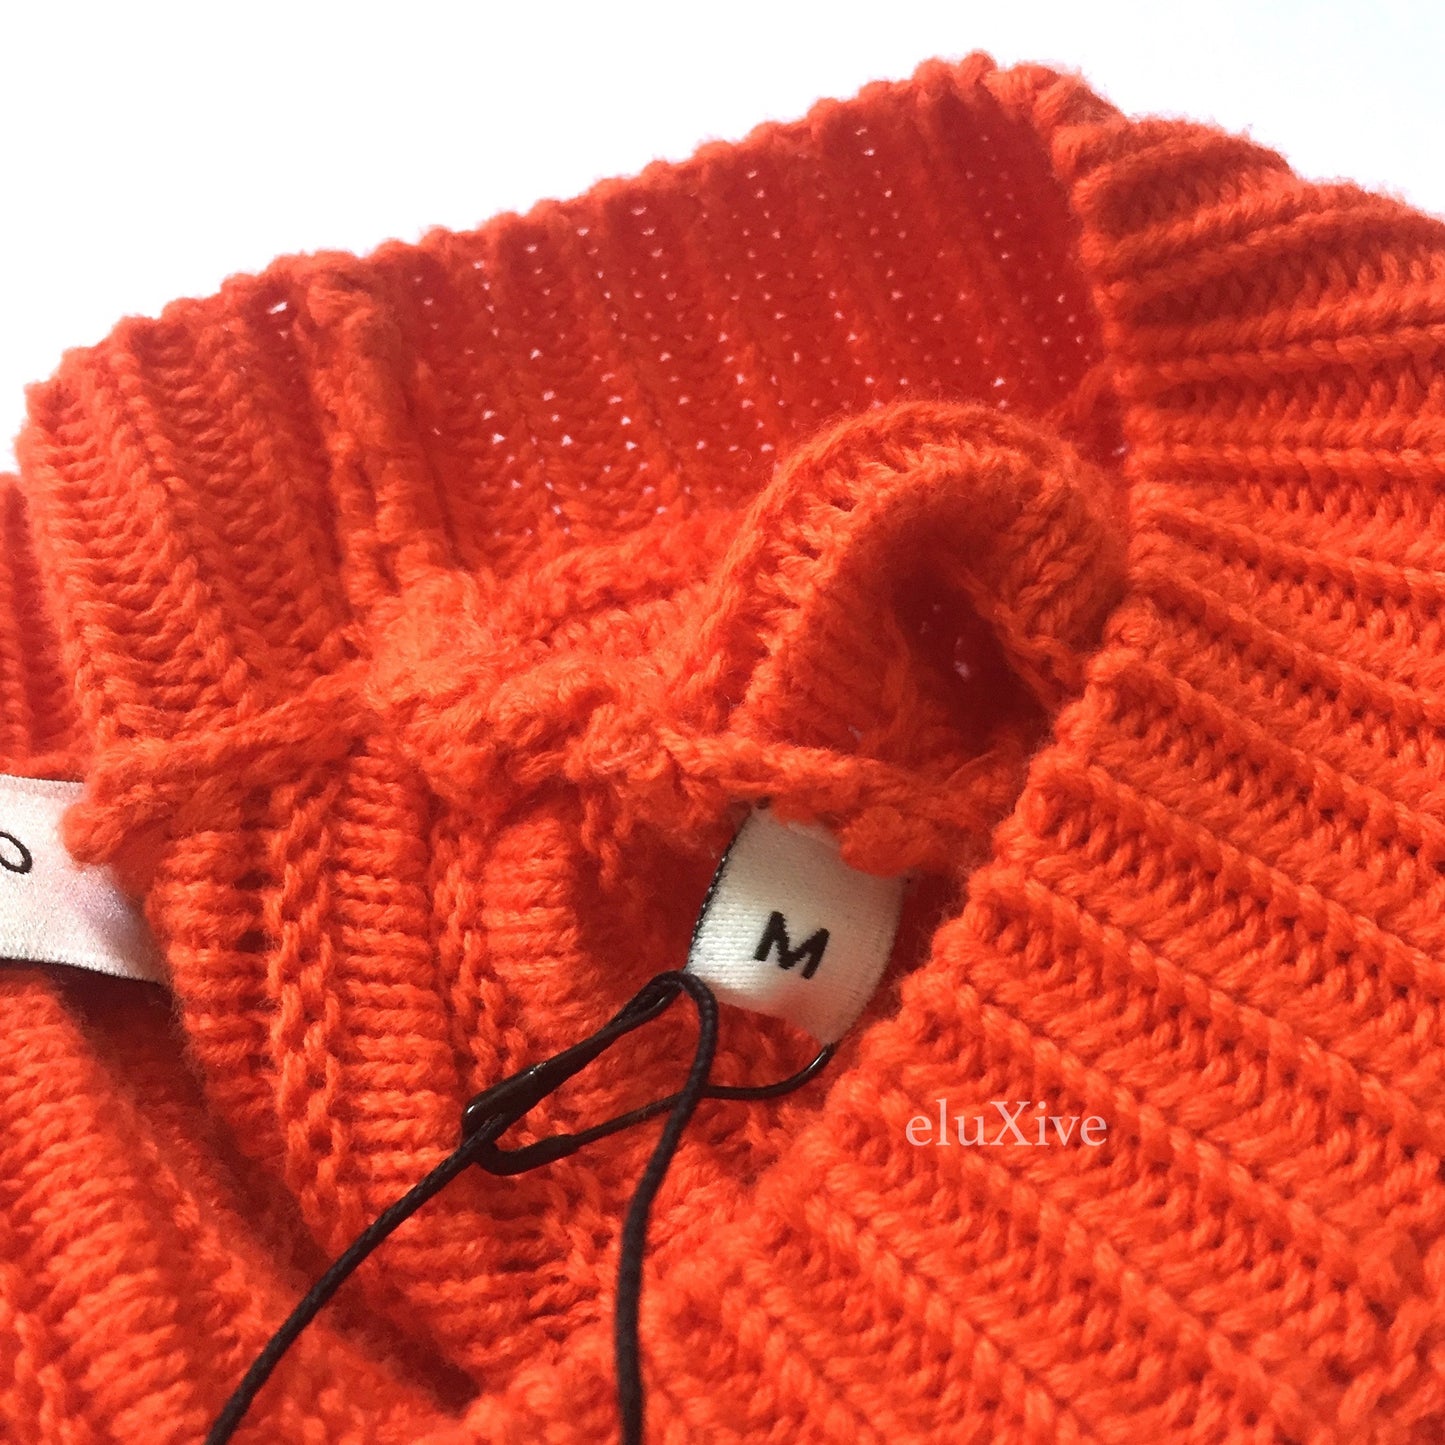 Sandro - Orange Thick Knit Sweater